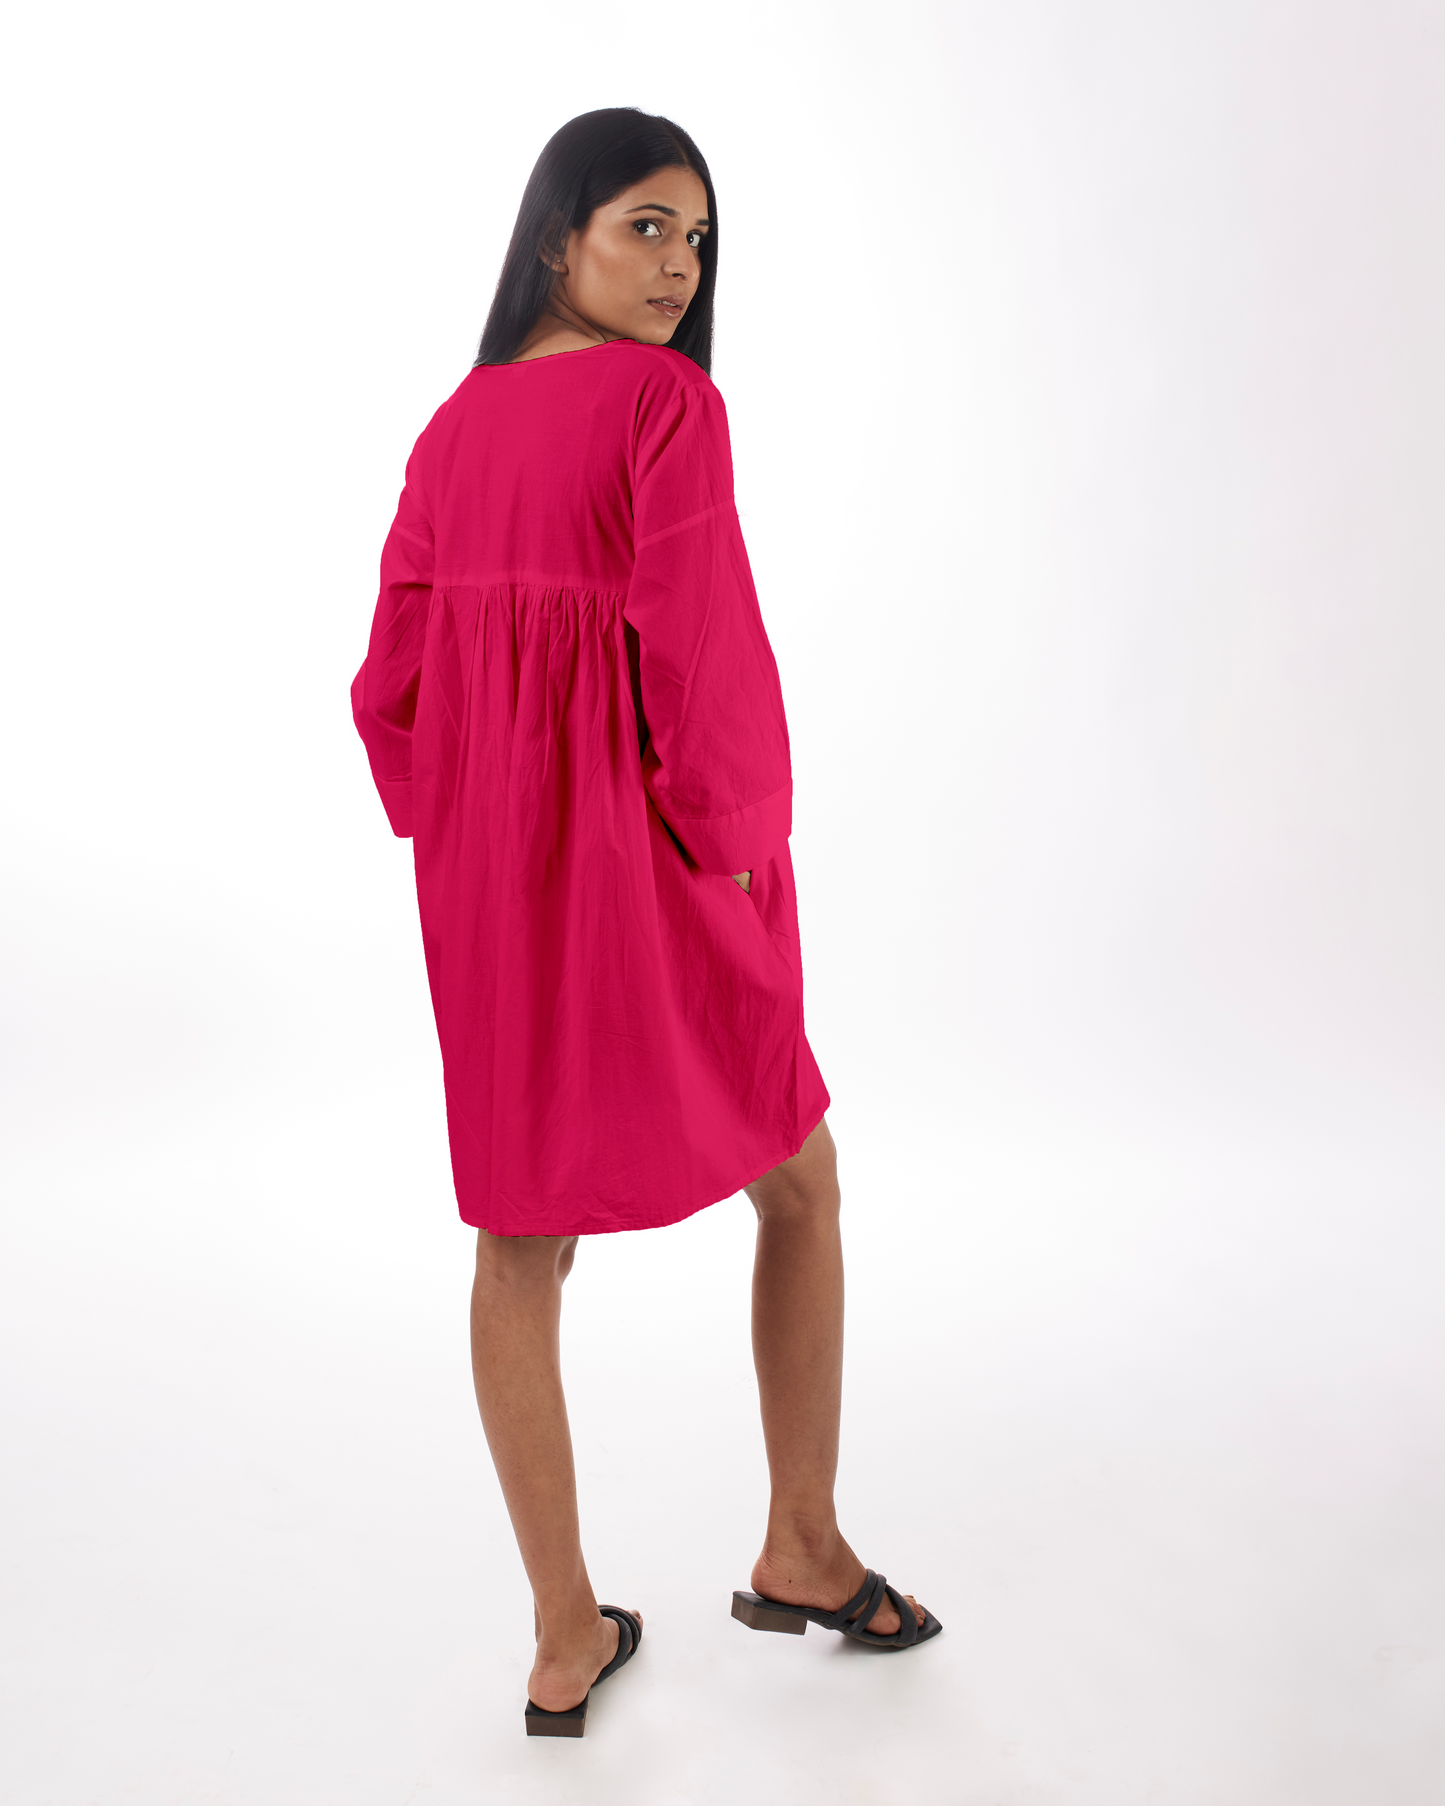 Pink Yoke Mini Dress at Kamakhyaa by Kamakhyaa. This item is 100% pure cotton, Casual Wear, FB ADS JUNE, KKYSS, Mini Dresses, Pink, Relaxed Fit, Summer Sutra, Womenswear